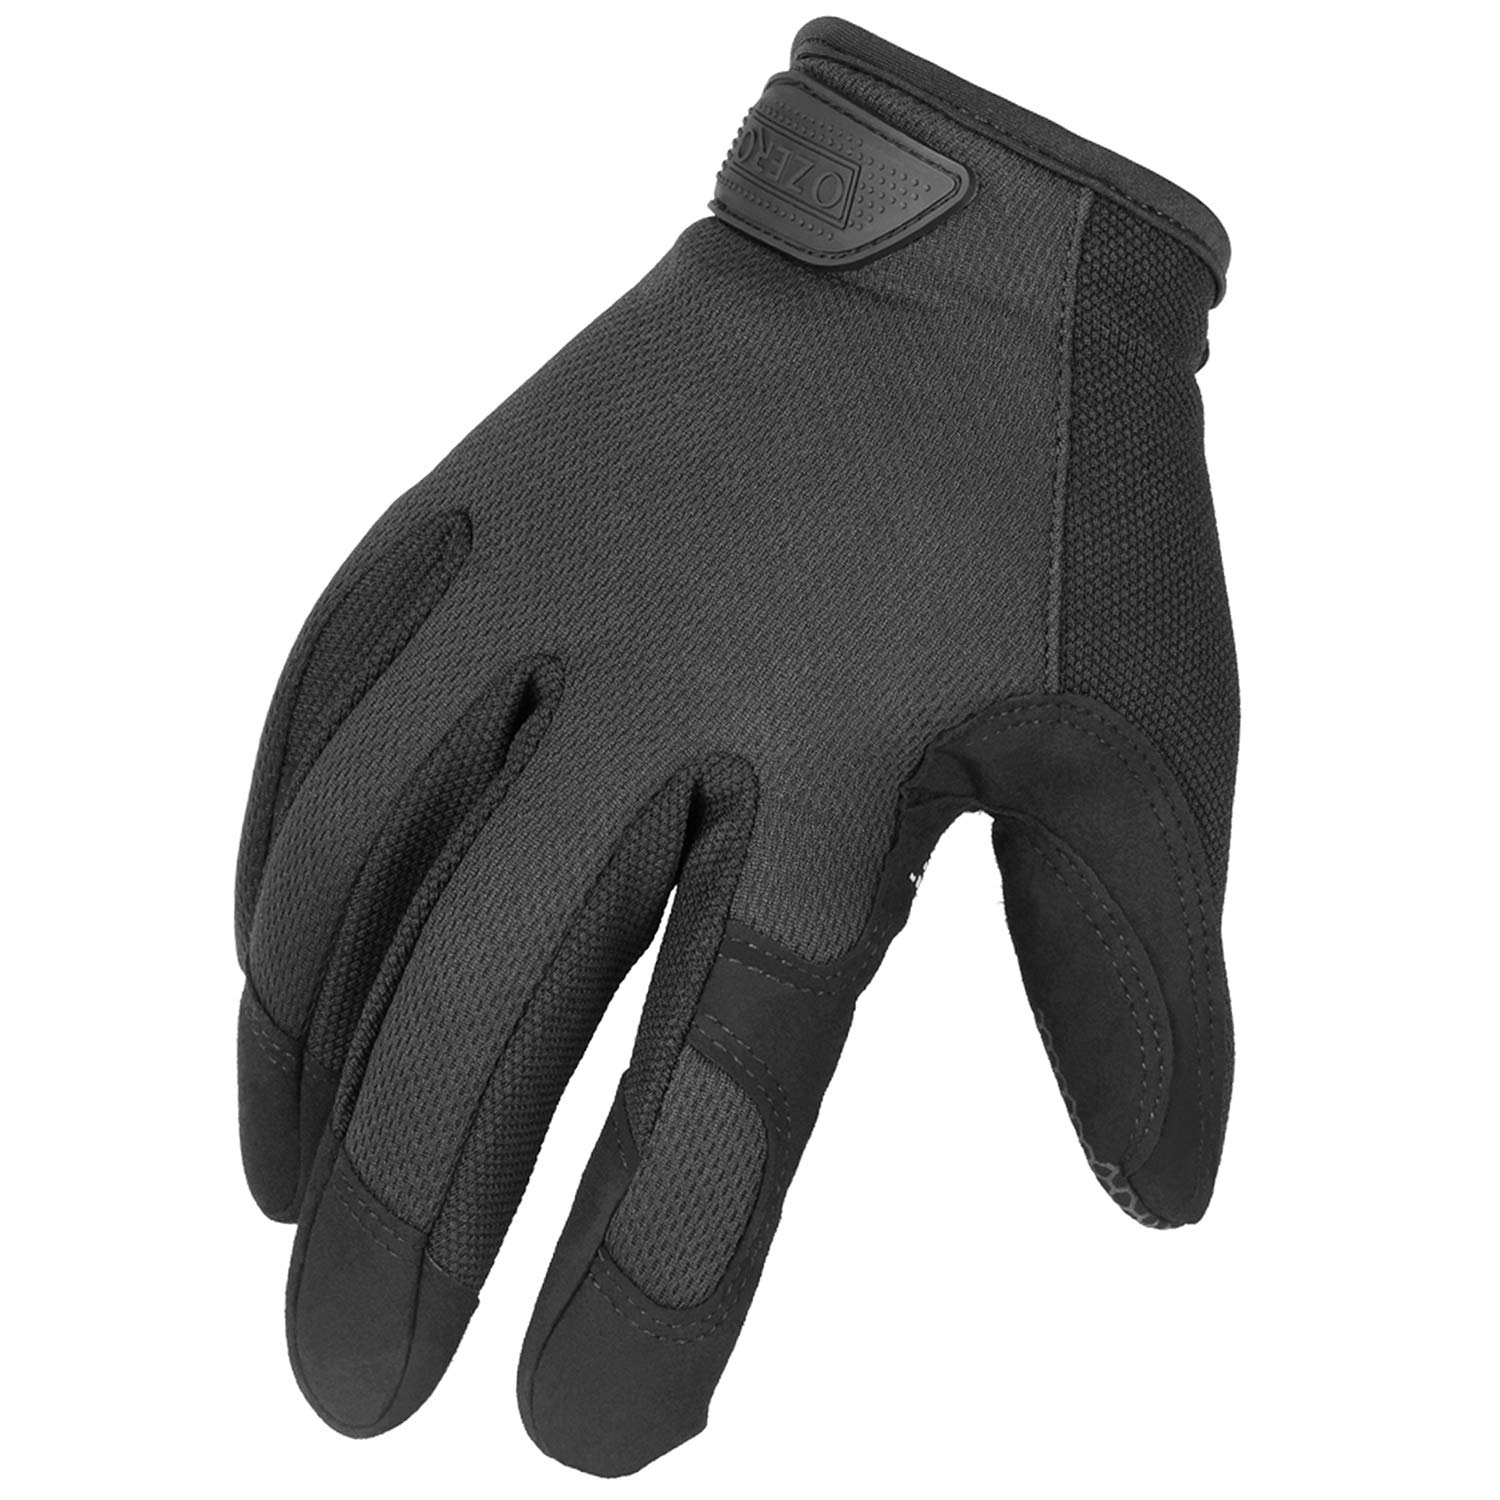 OZERO Work Gloves for Men: Touchscreen Mechanic Gloves Flex Grip Non-slip Palm Working Glove for Construction, Gardening, Home P